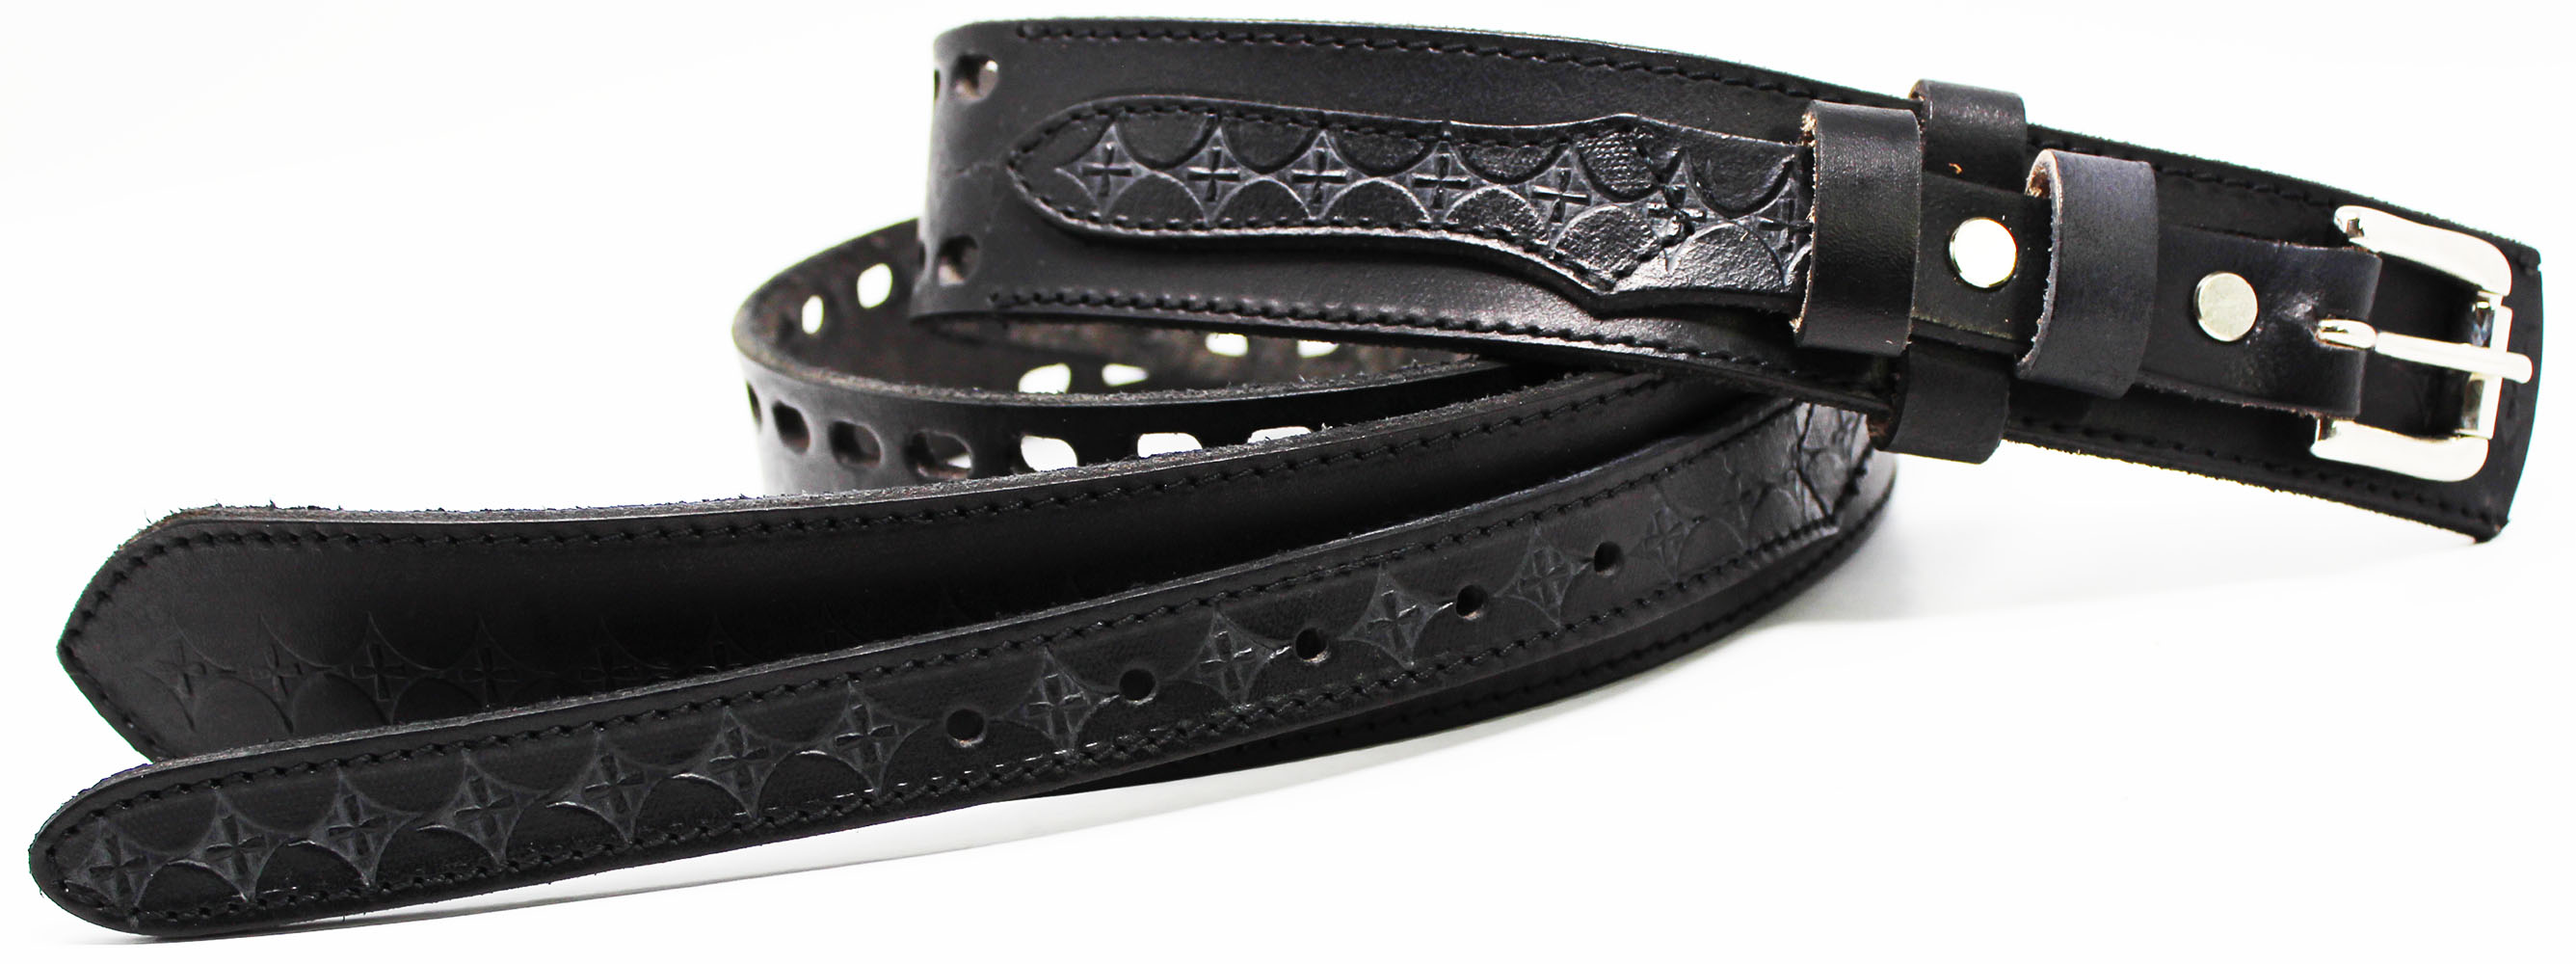 37-38  Men's 100% Leather Double Hole Casual Jean Ranger Belt Cross Black 12RAA23BK - image 3 of 5